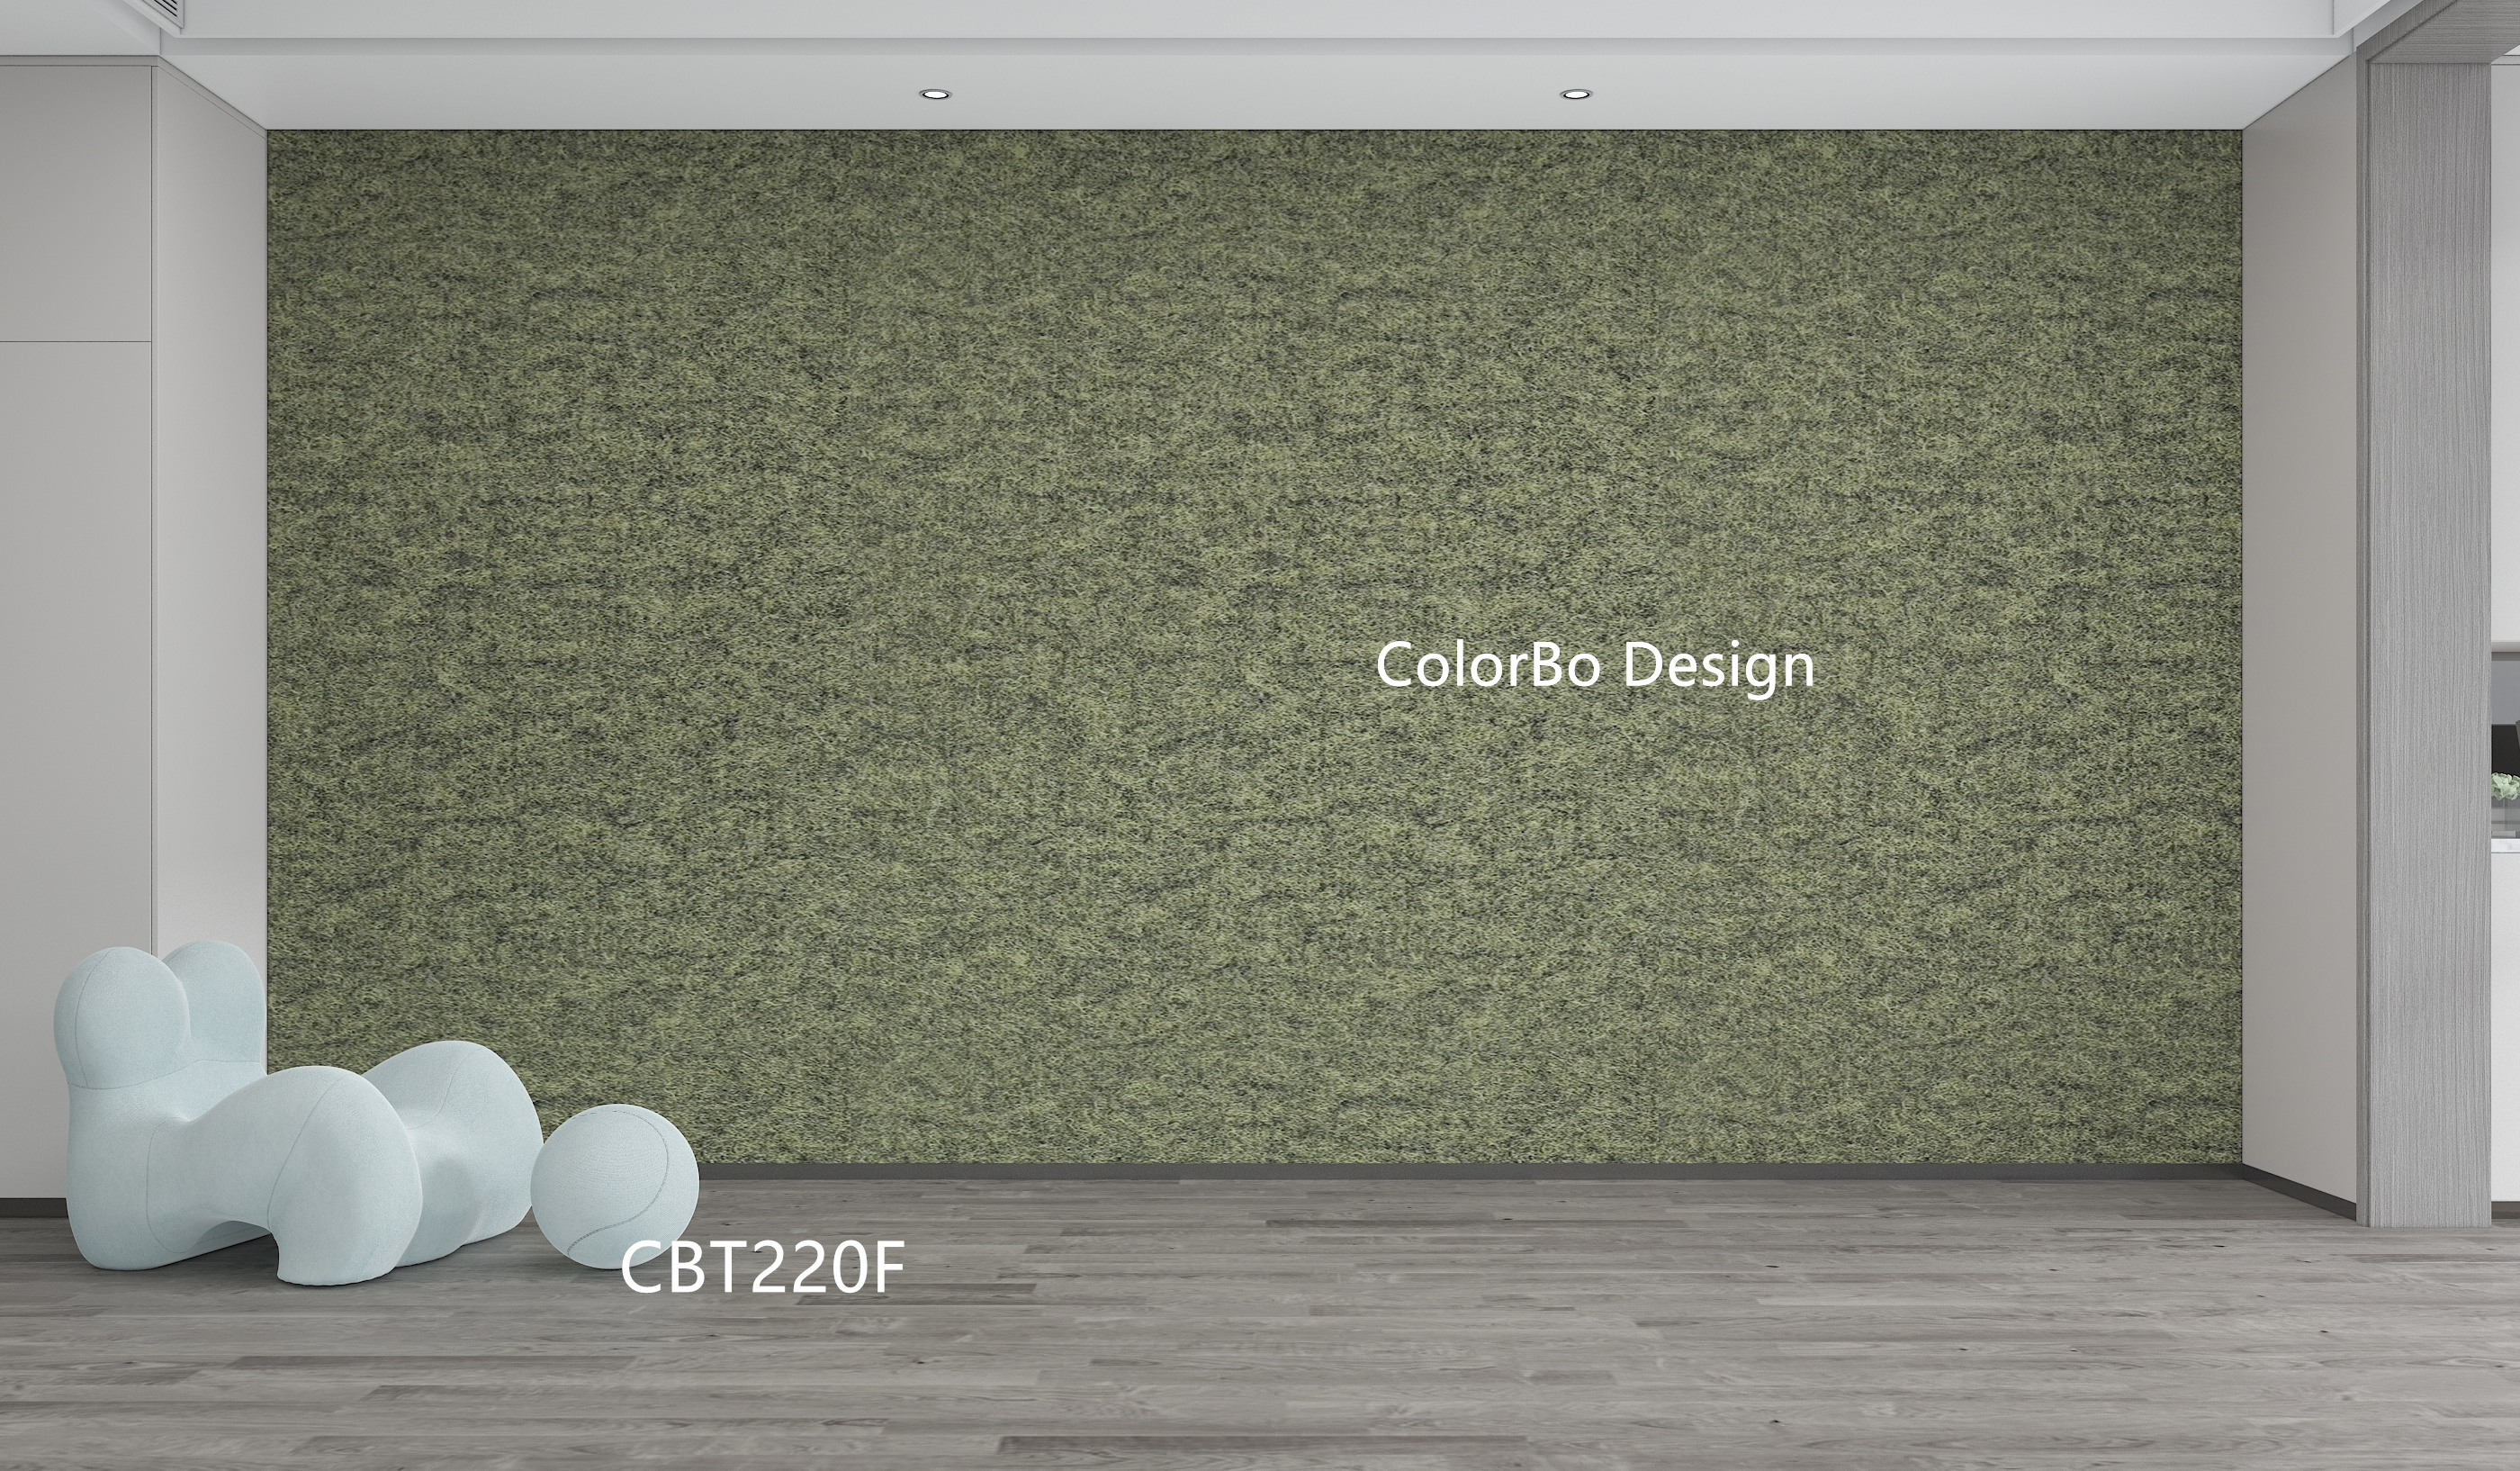 CBT220 Material de insonorización con cancelación de ruido Paneles acústicos  de poliéster Acústico de PET liso - Comprar panel acústico, varios colores  a elegir, panel decorativo Producto en ColorBo